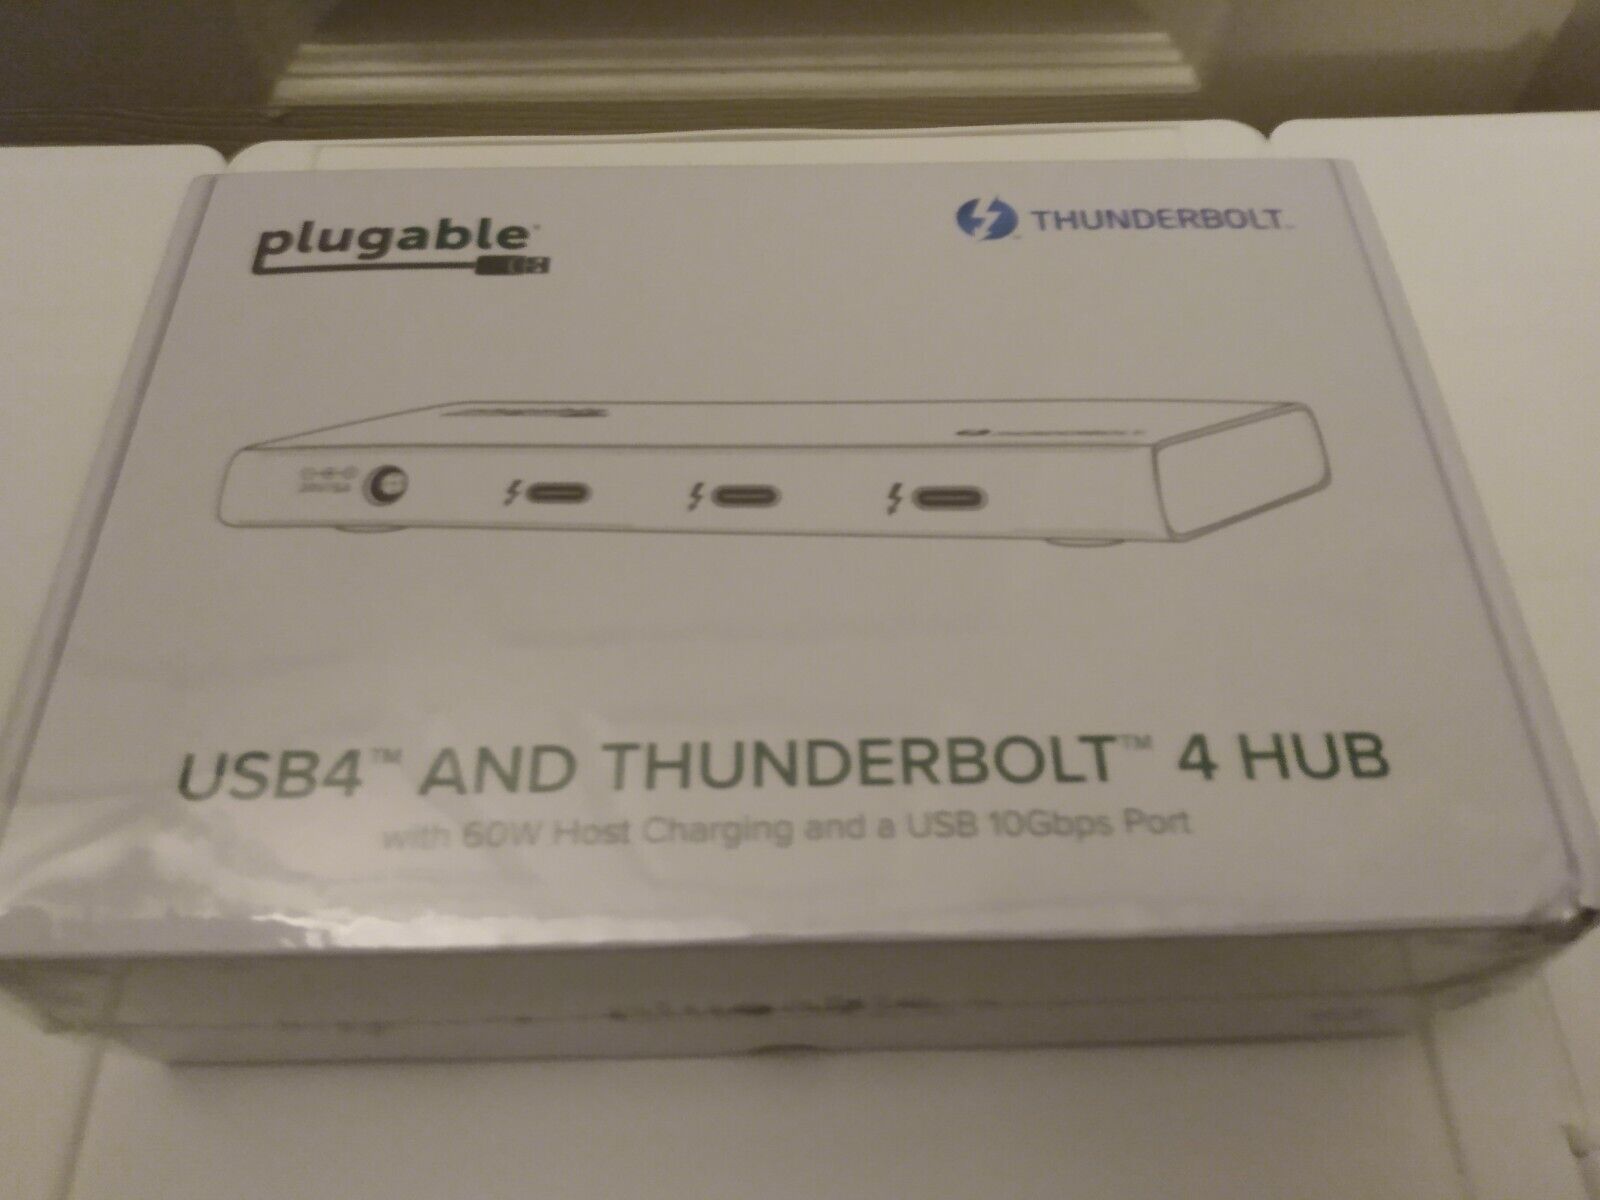 Plugable USB4 and Thunderbolt 4 Hub w/ 60W Charging 10Gbps USB4-HUB3A New Sealed